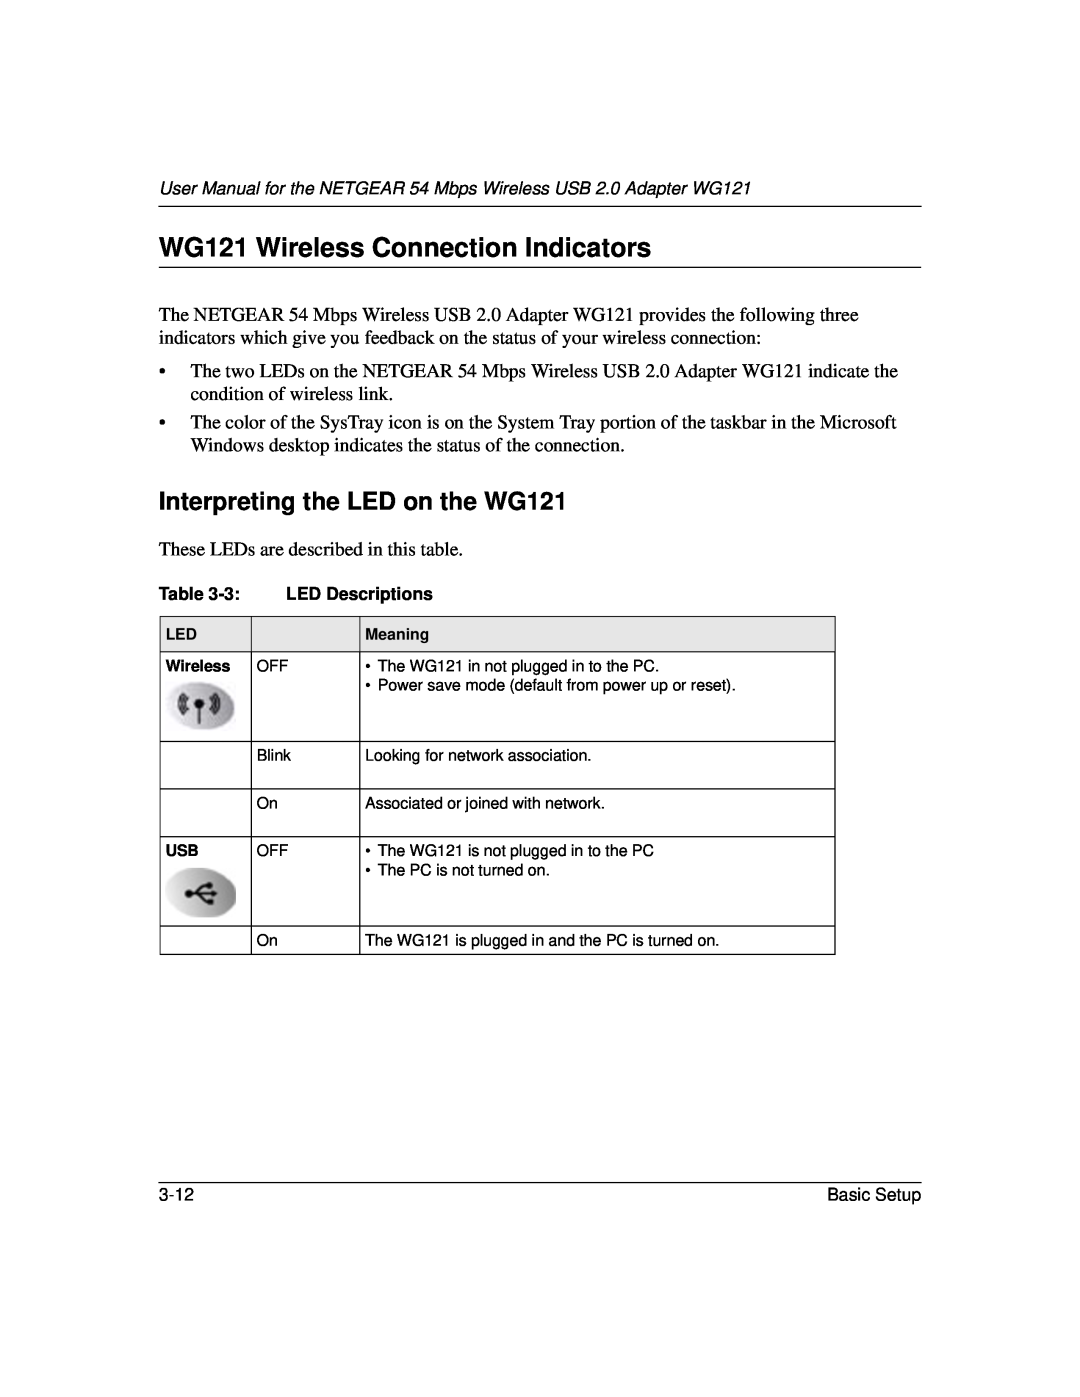 NETGEAR user manual WG121 Wireless Connection Indicators, Interpreting the LED on the WG121 